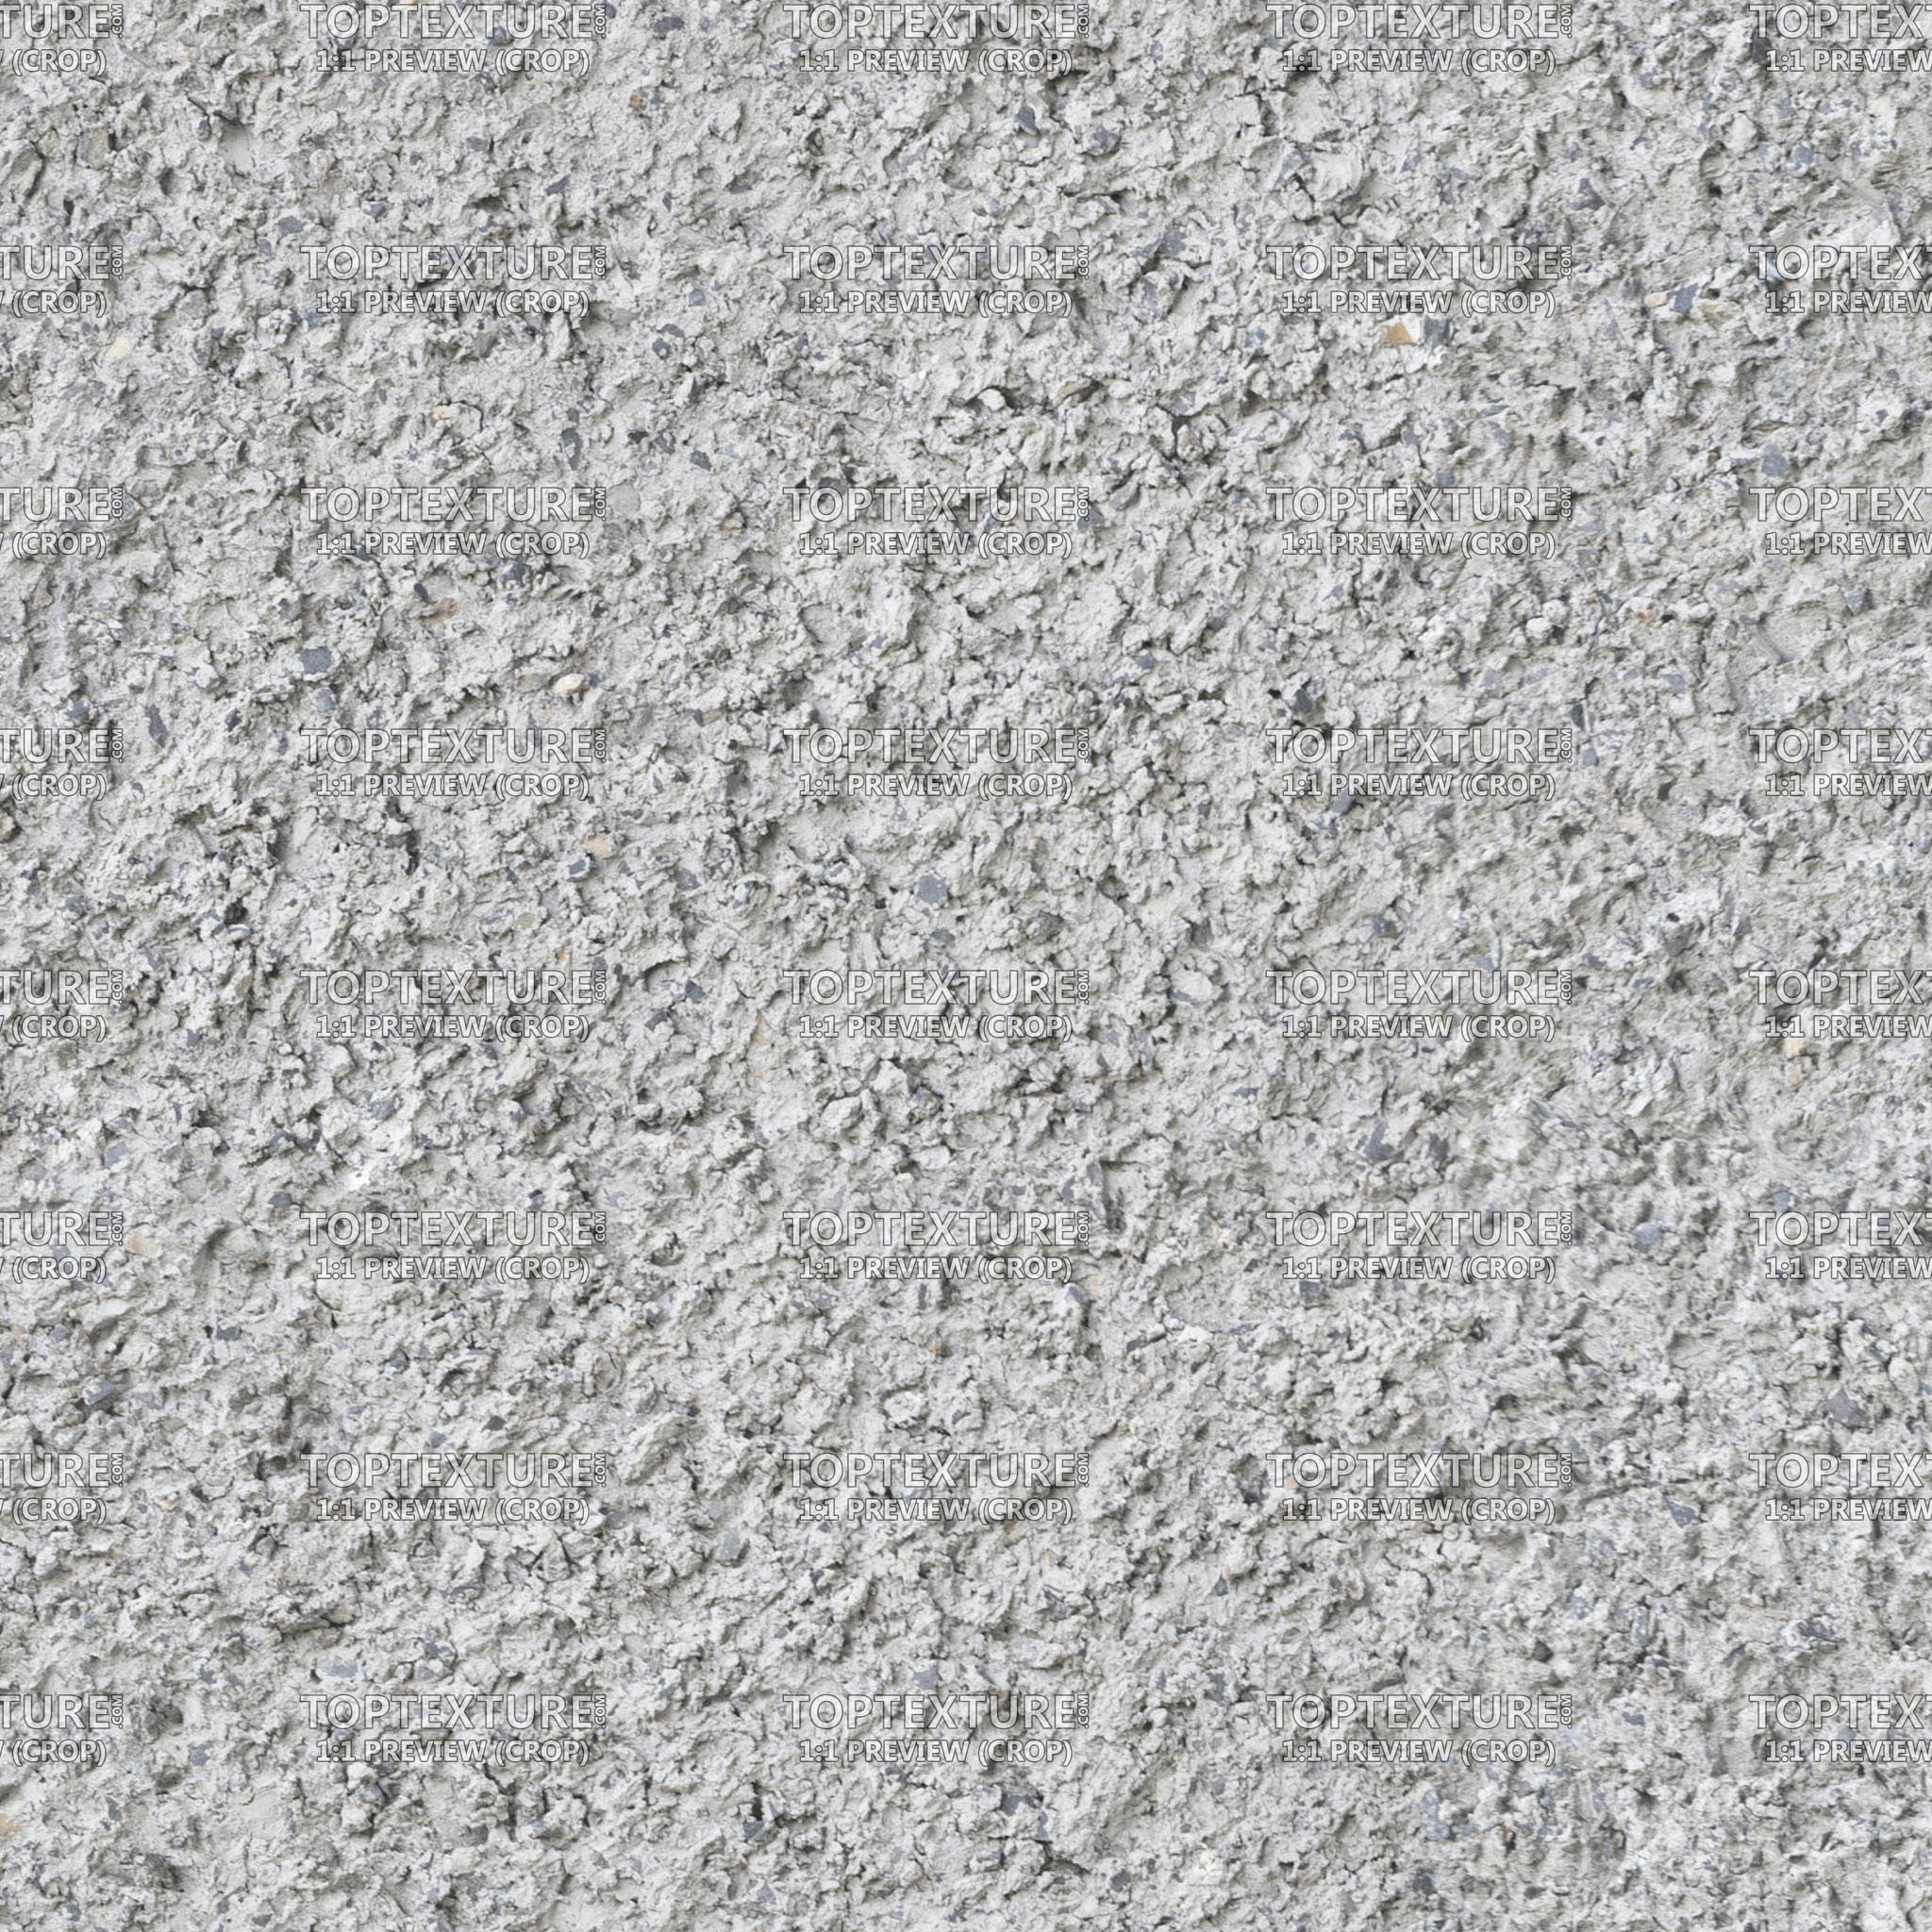 Rough Bumpy Cement Stucco - Top Texture